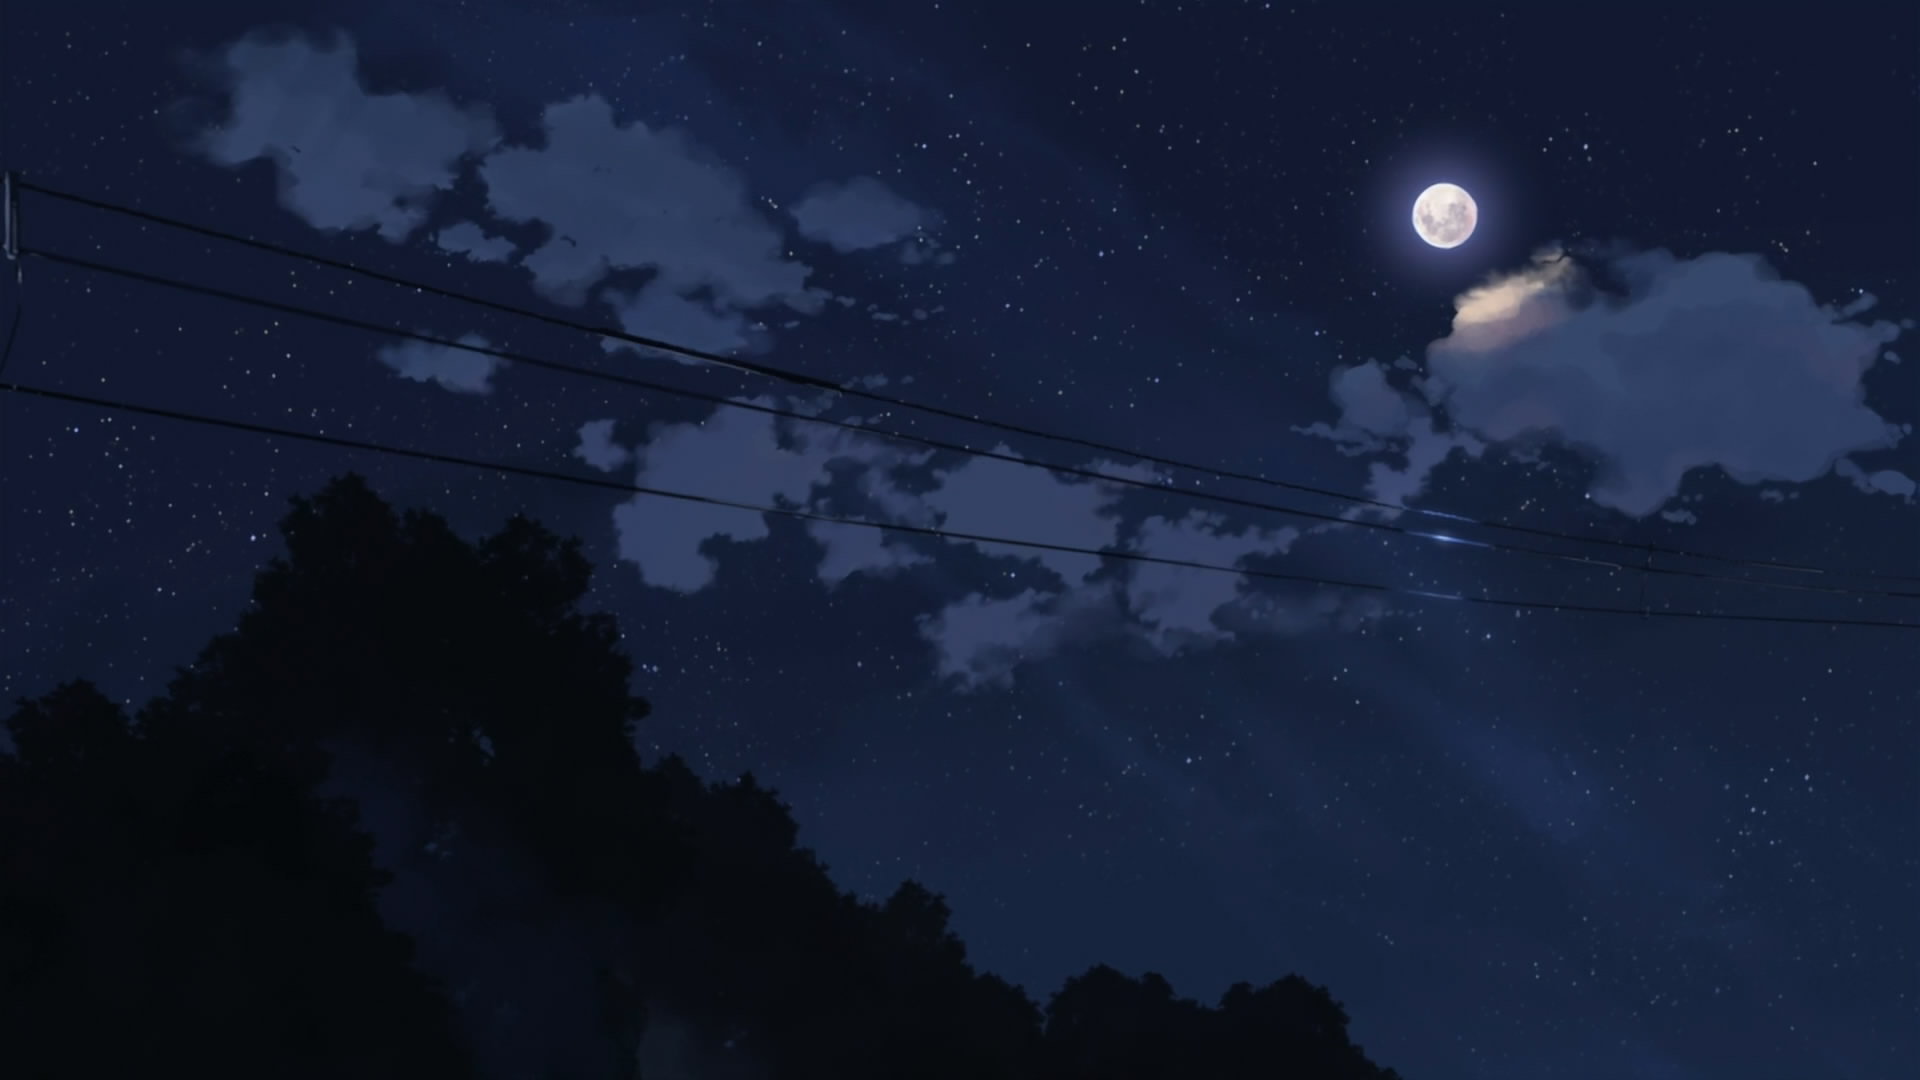 Anime Sky Background